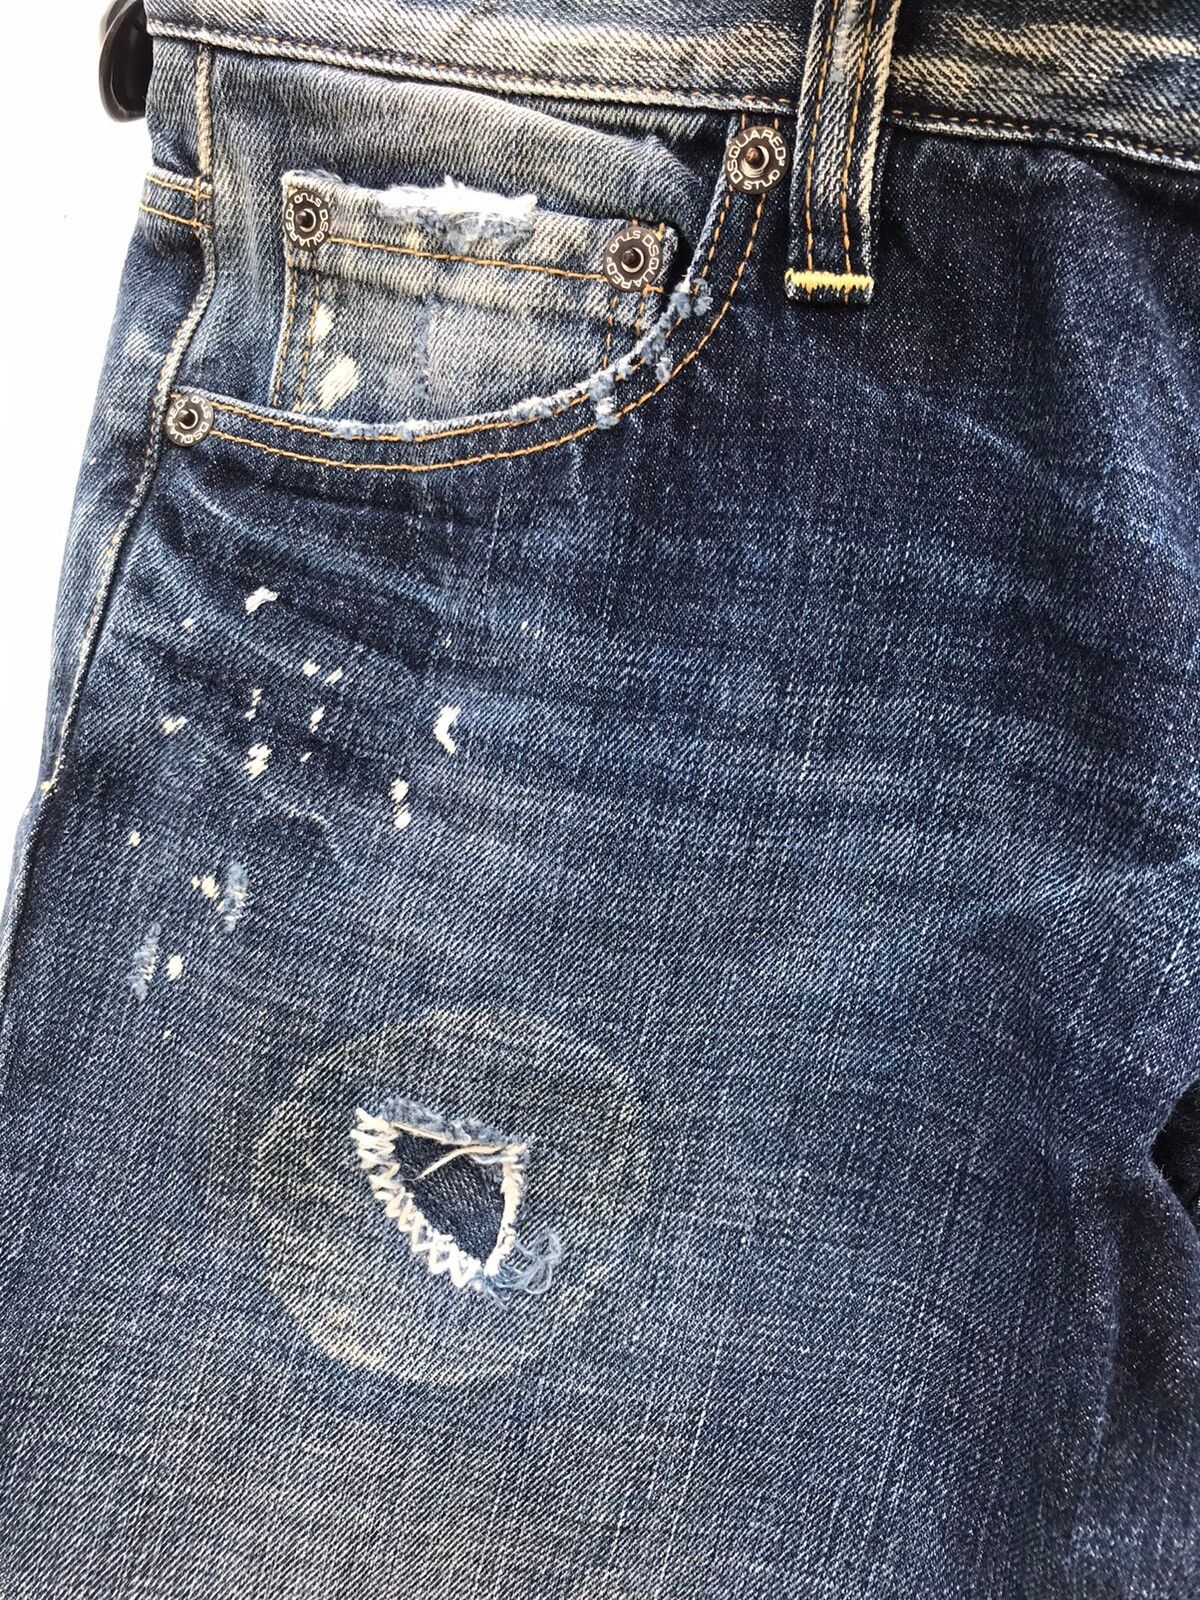 Vintage Dsquared2 Denim Jeans Rare Design - 9